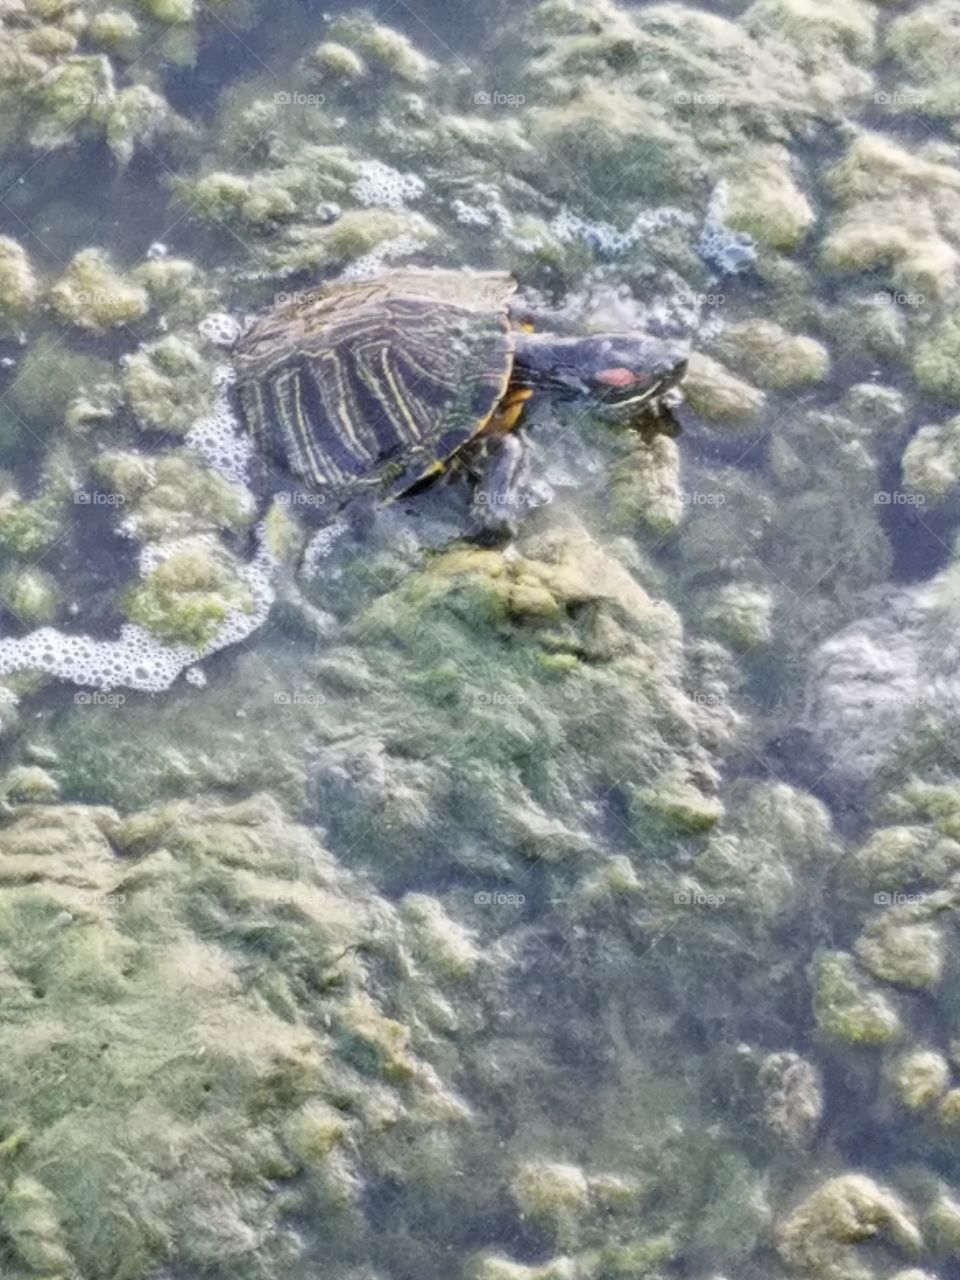 Turtle in Algae Lake